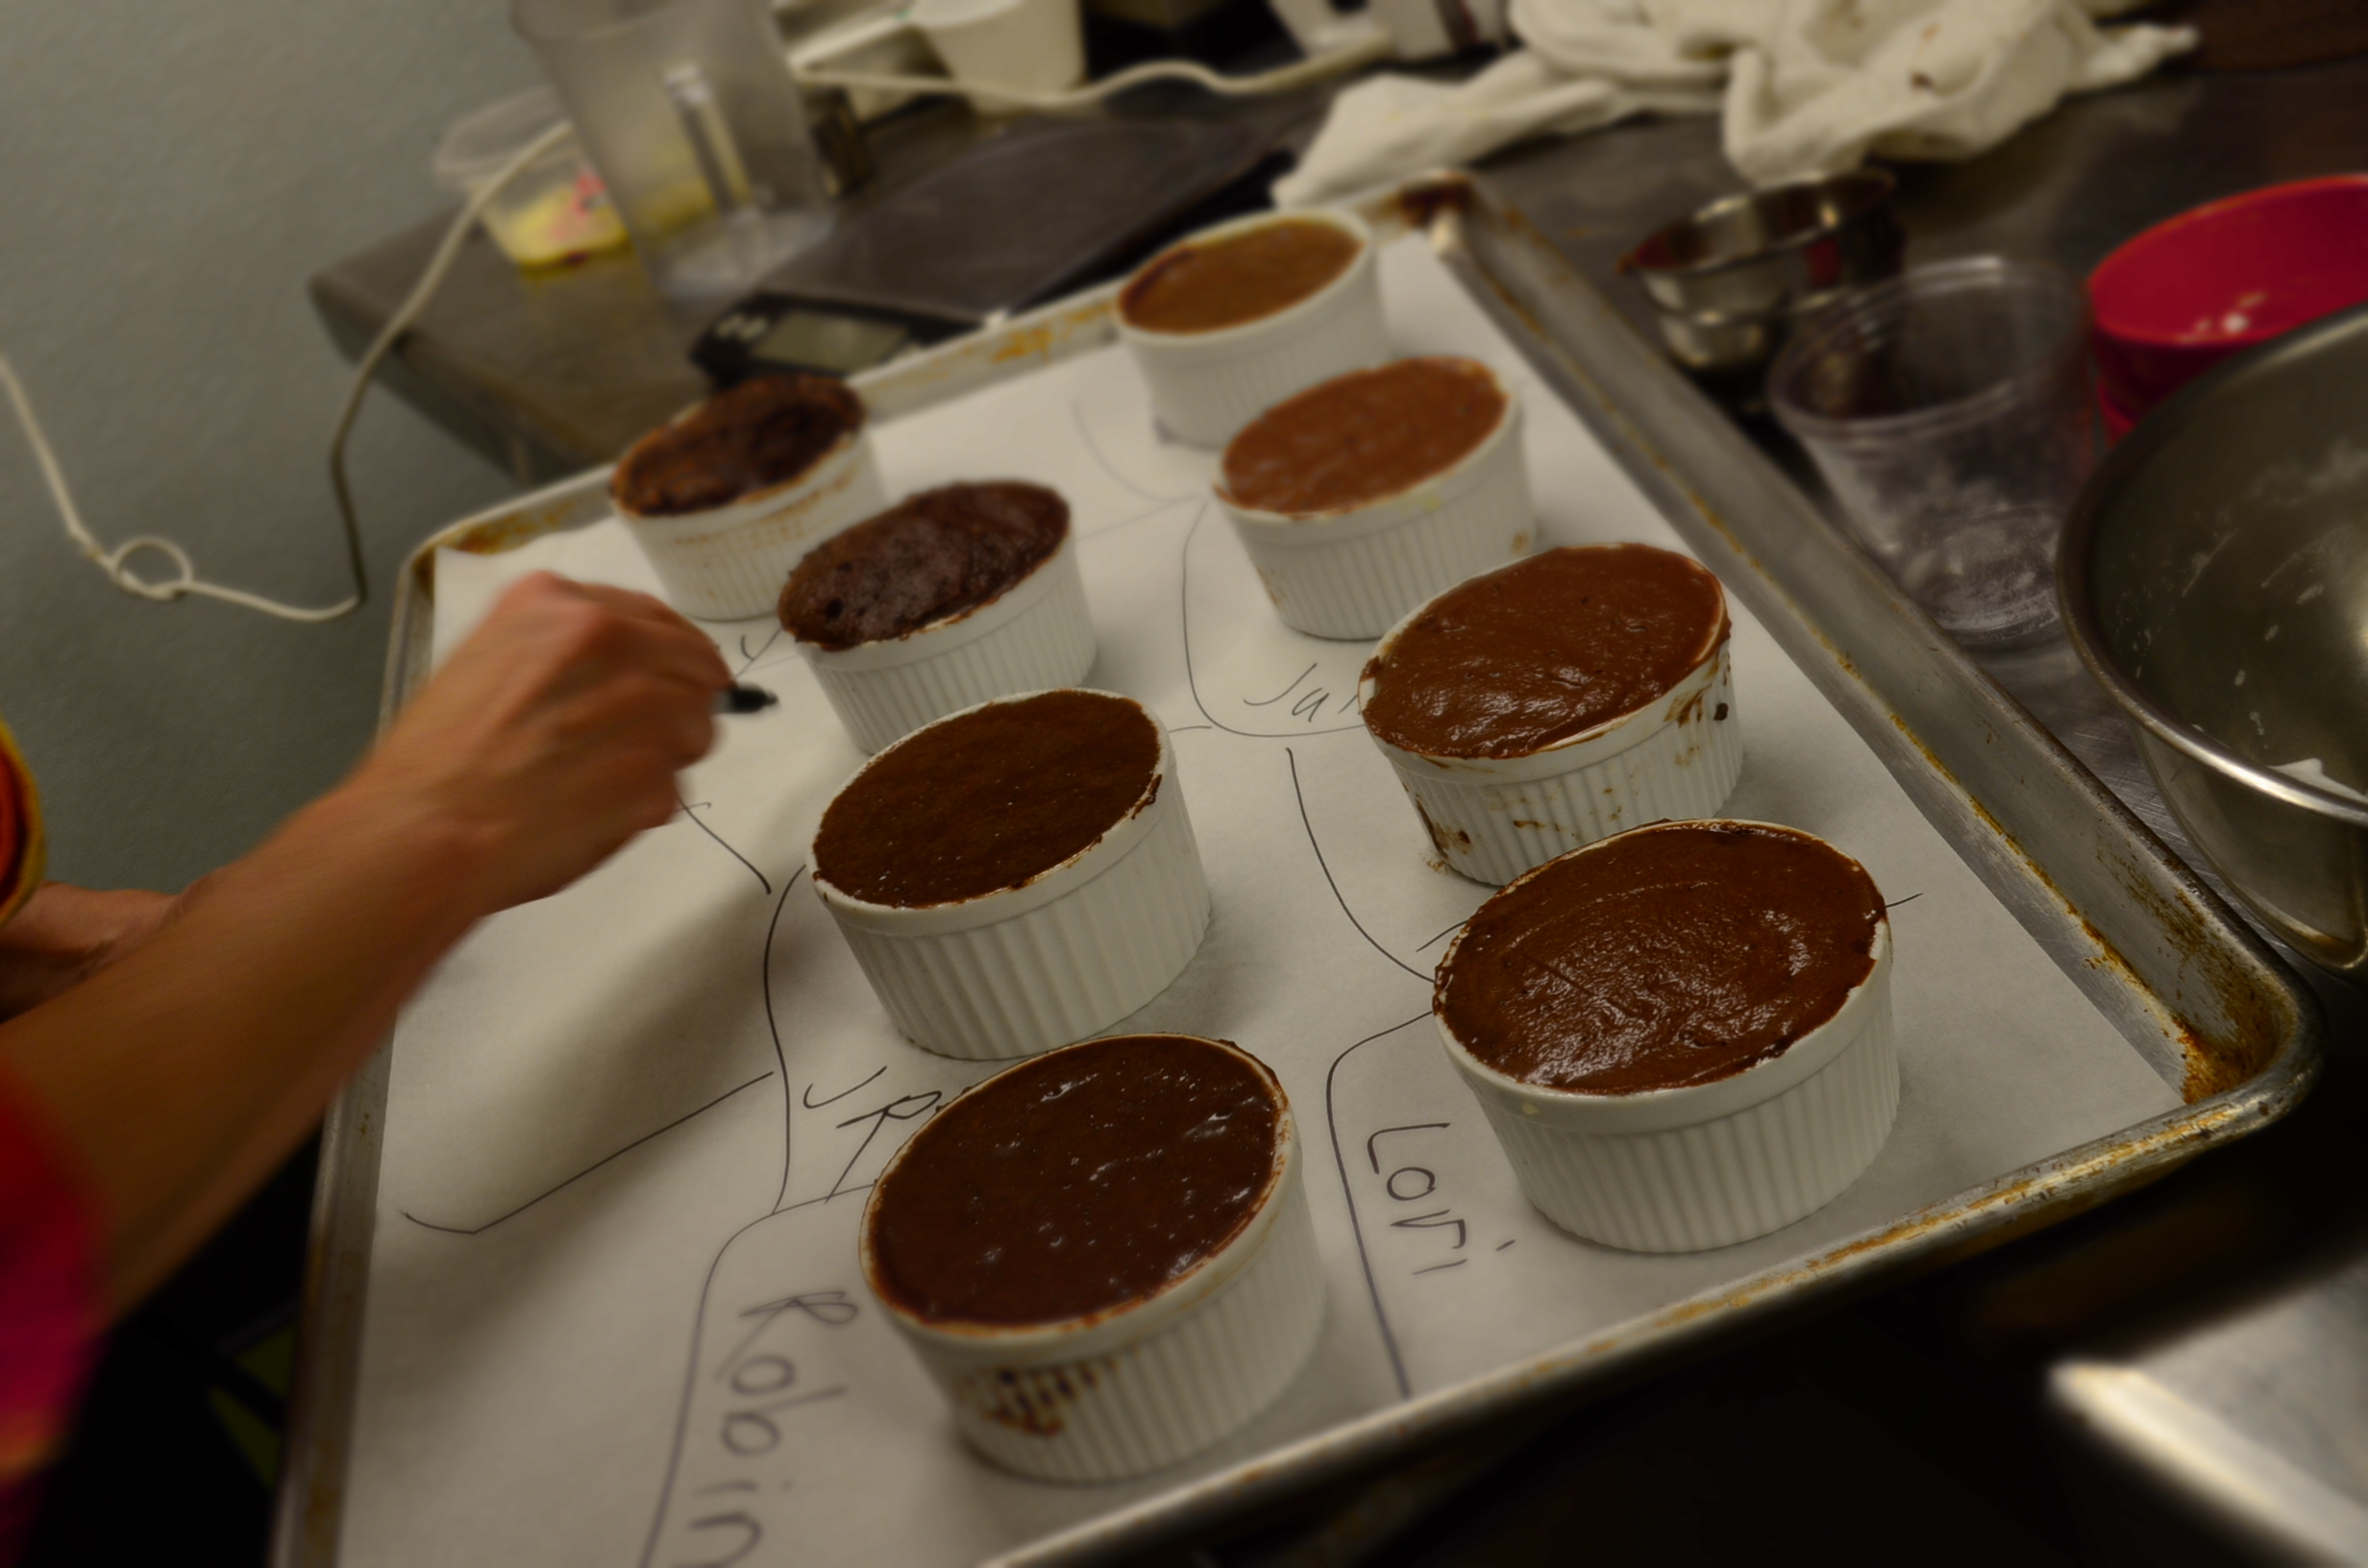 April Chocolate Baking Lab 101: Chocolate Souffle & Flourless Chocolate Cake